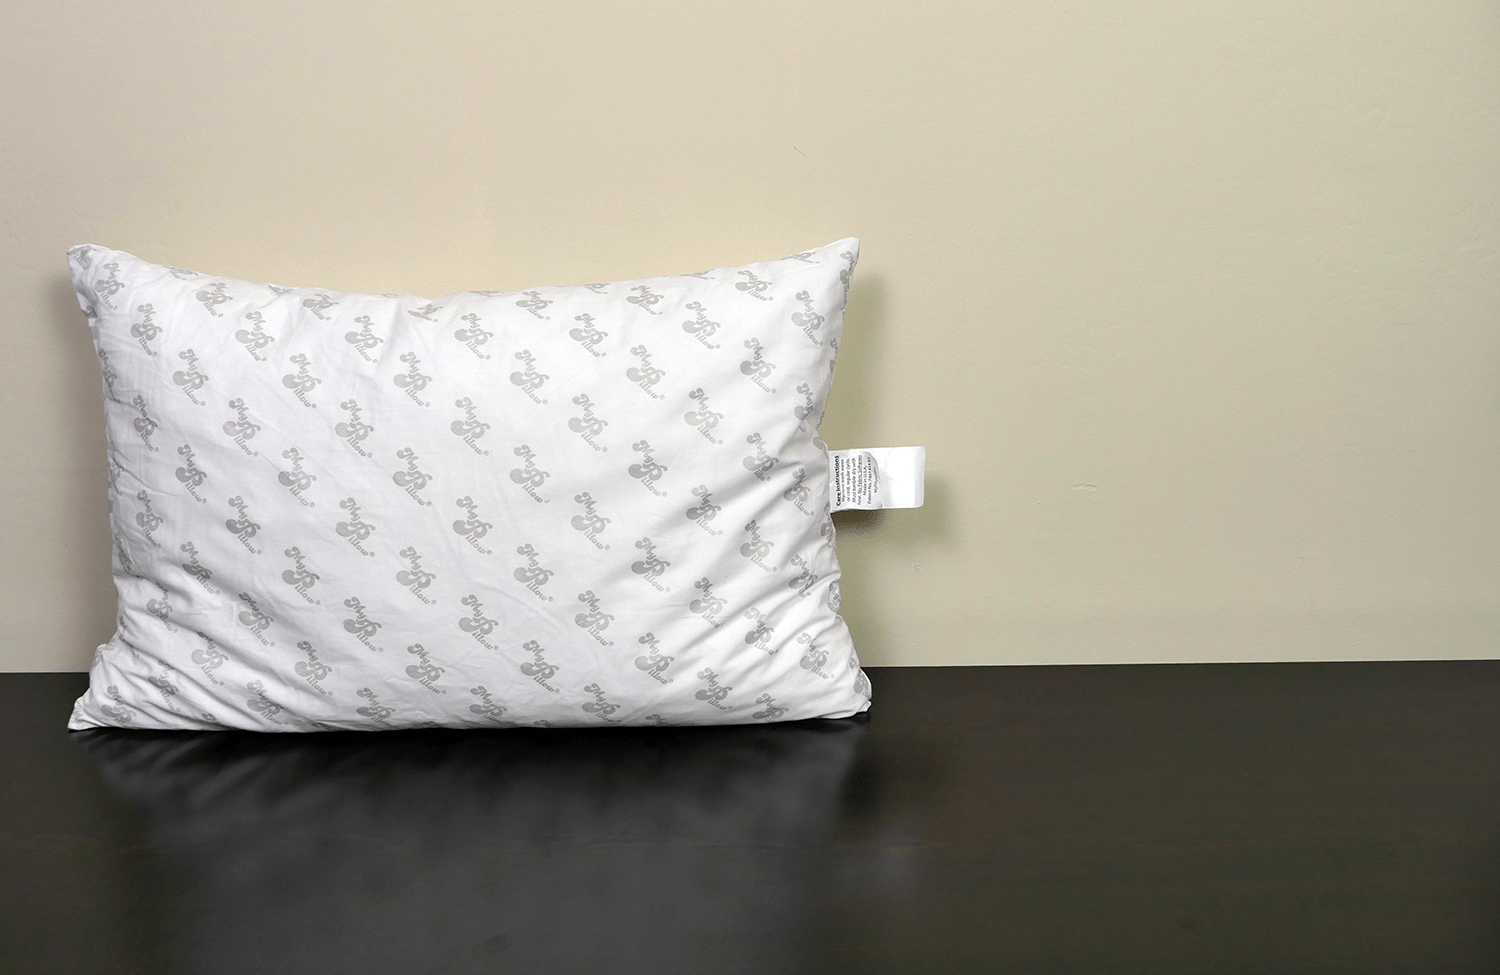 My Pillow Review | Sleepopolis